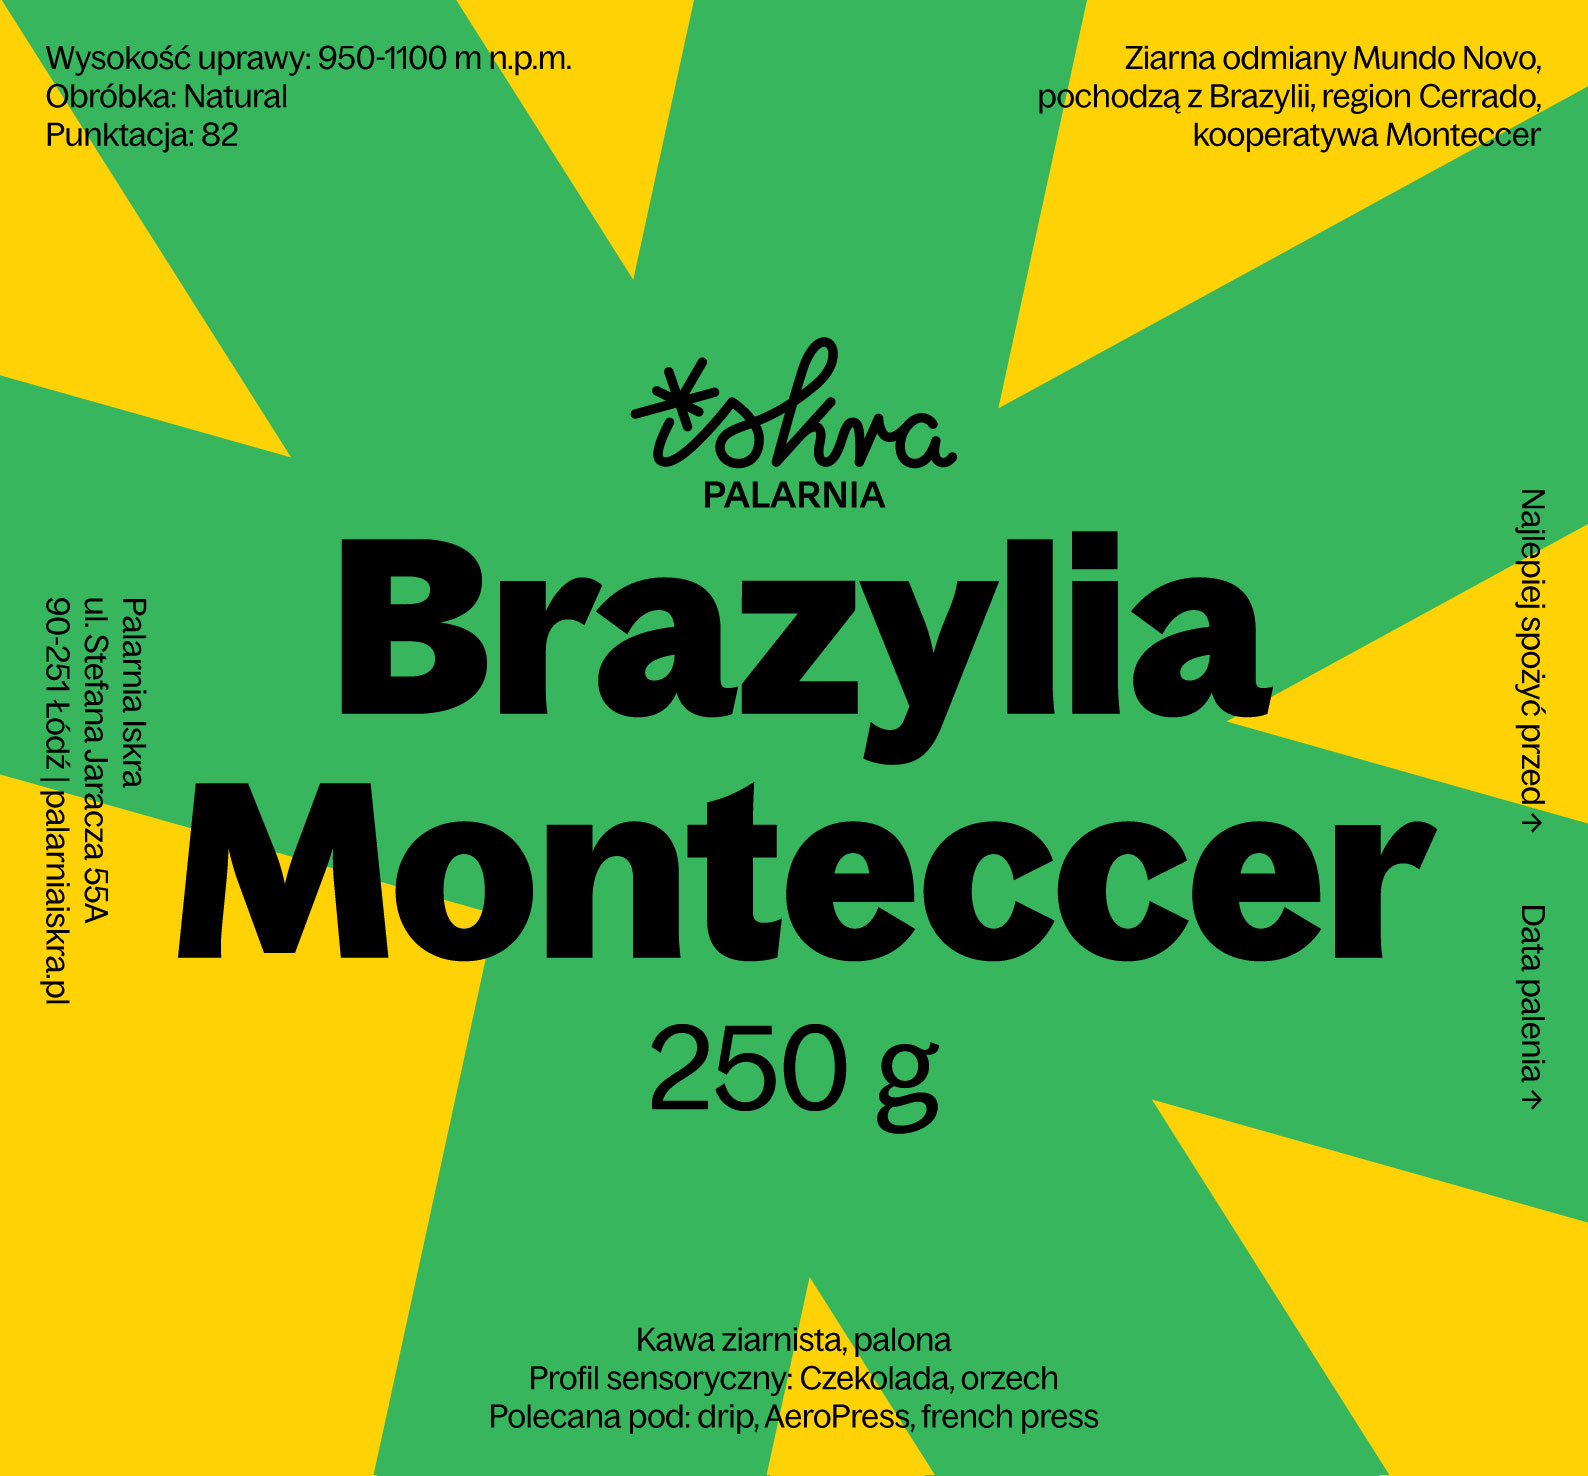 Brazylia Monteccer